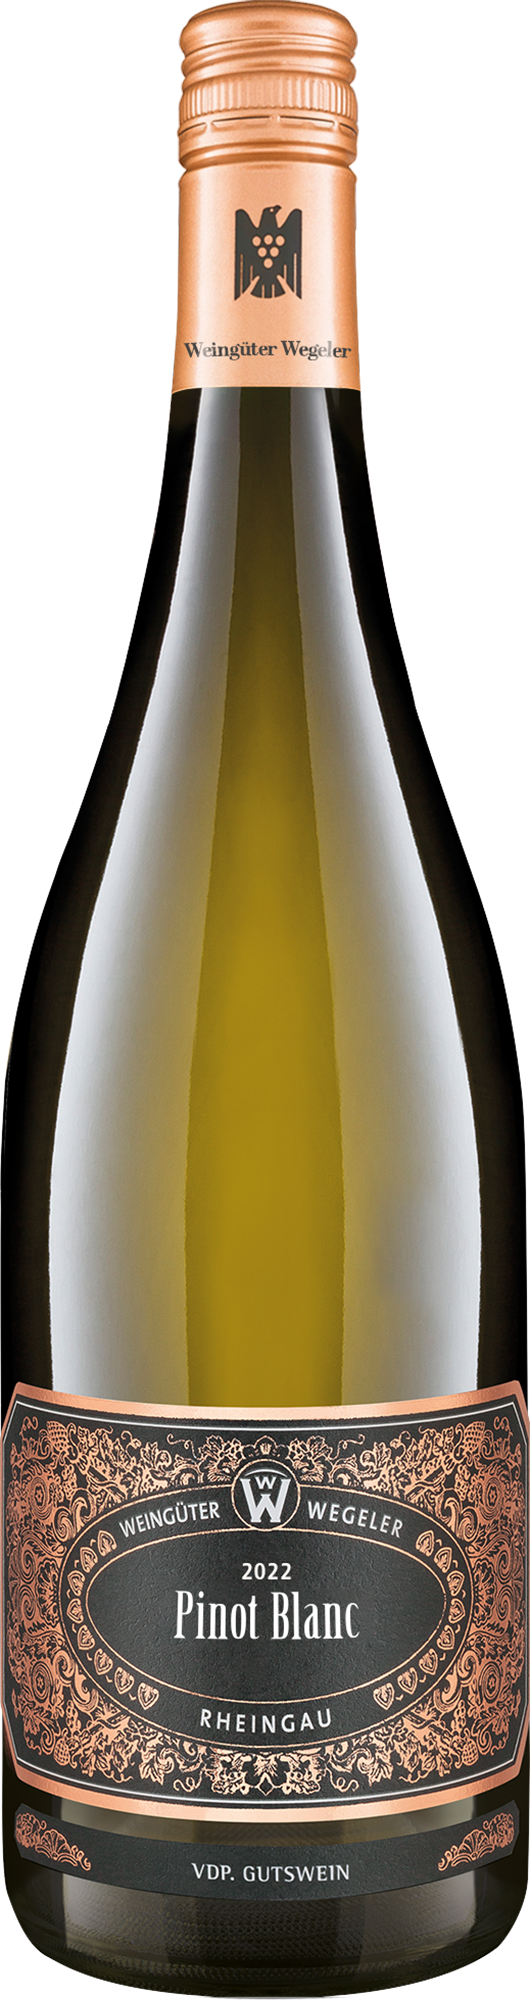 2022 Wegeler Pinot Blanc Rheingau Weissburgunder